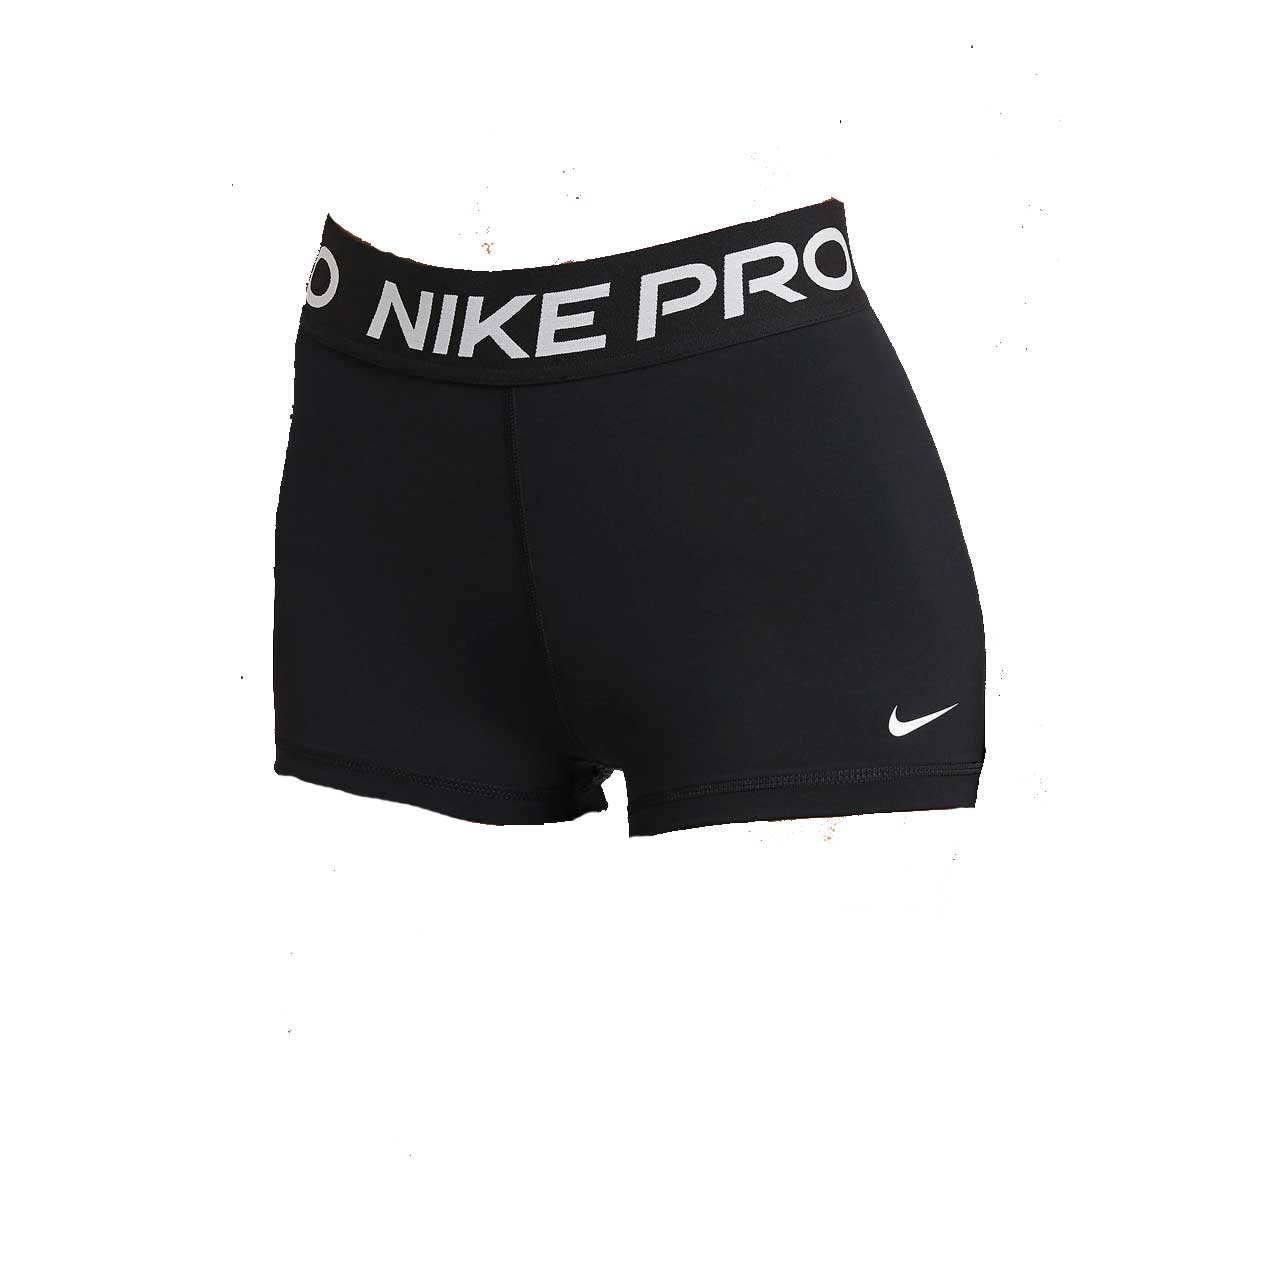 Damen Shorts Nike Pro